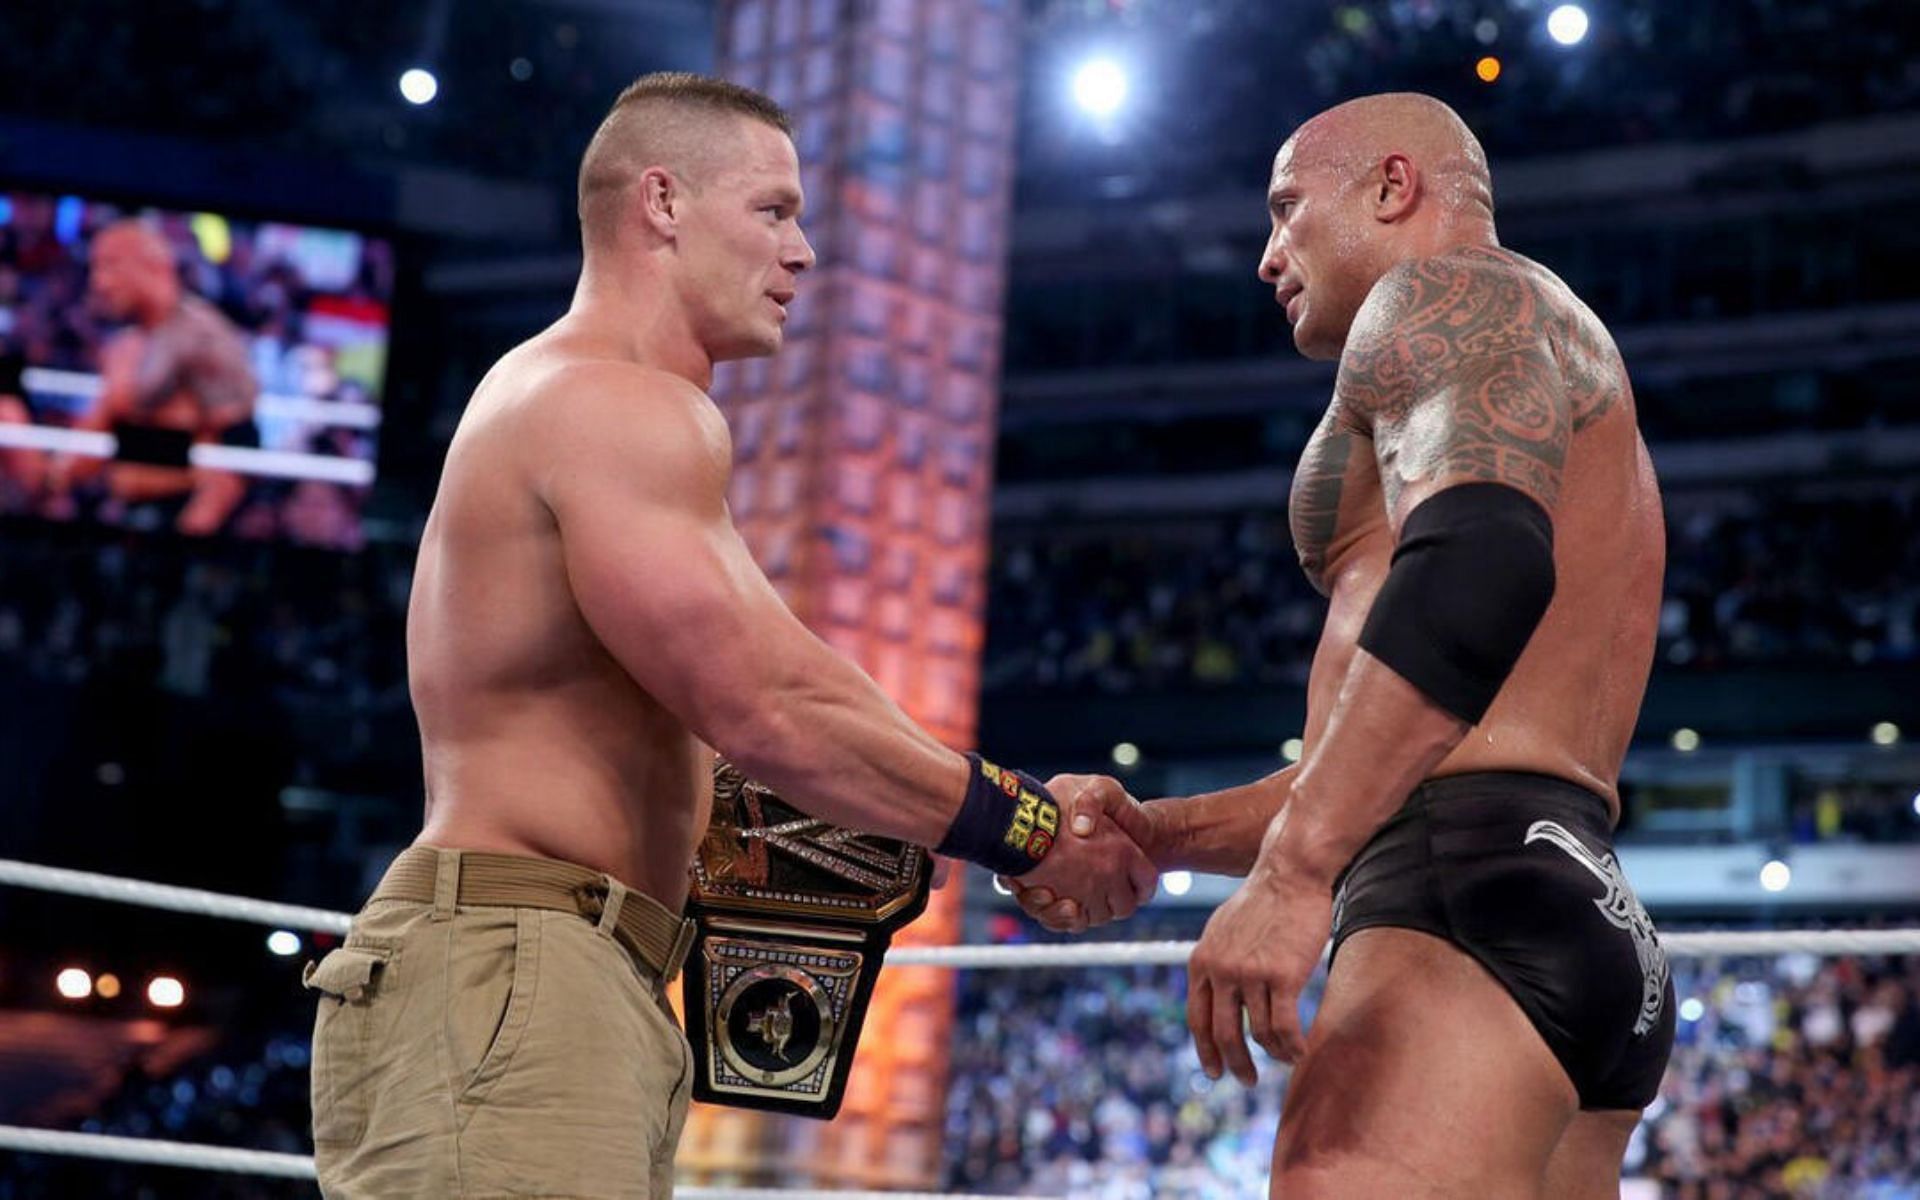 John Cena defeats The Rock for the WWE Championship at WrestleMania 29.